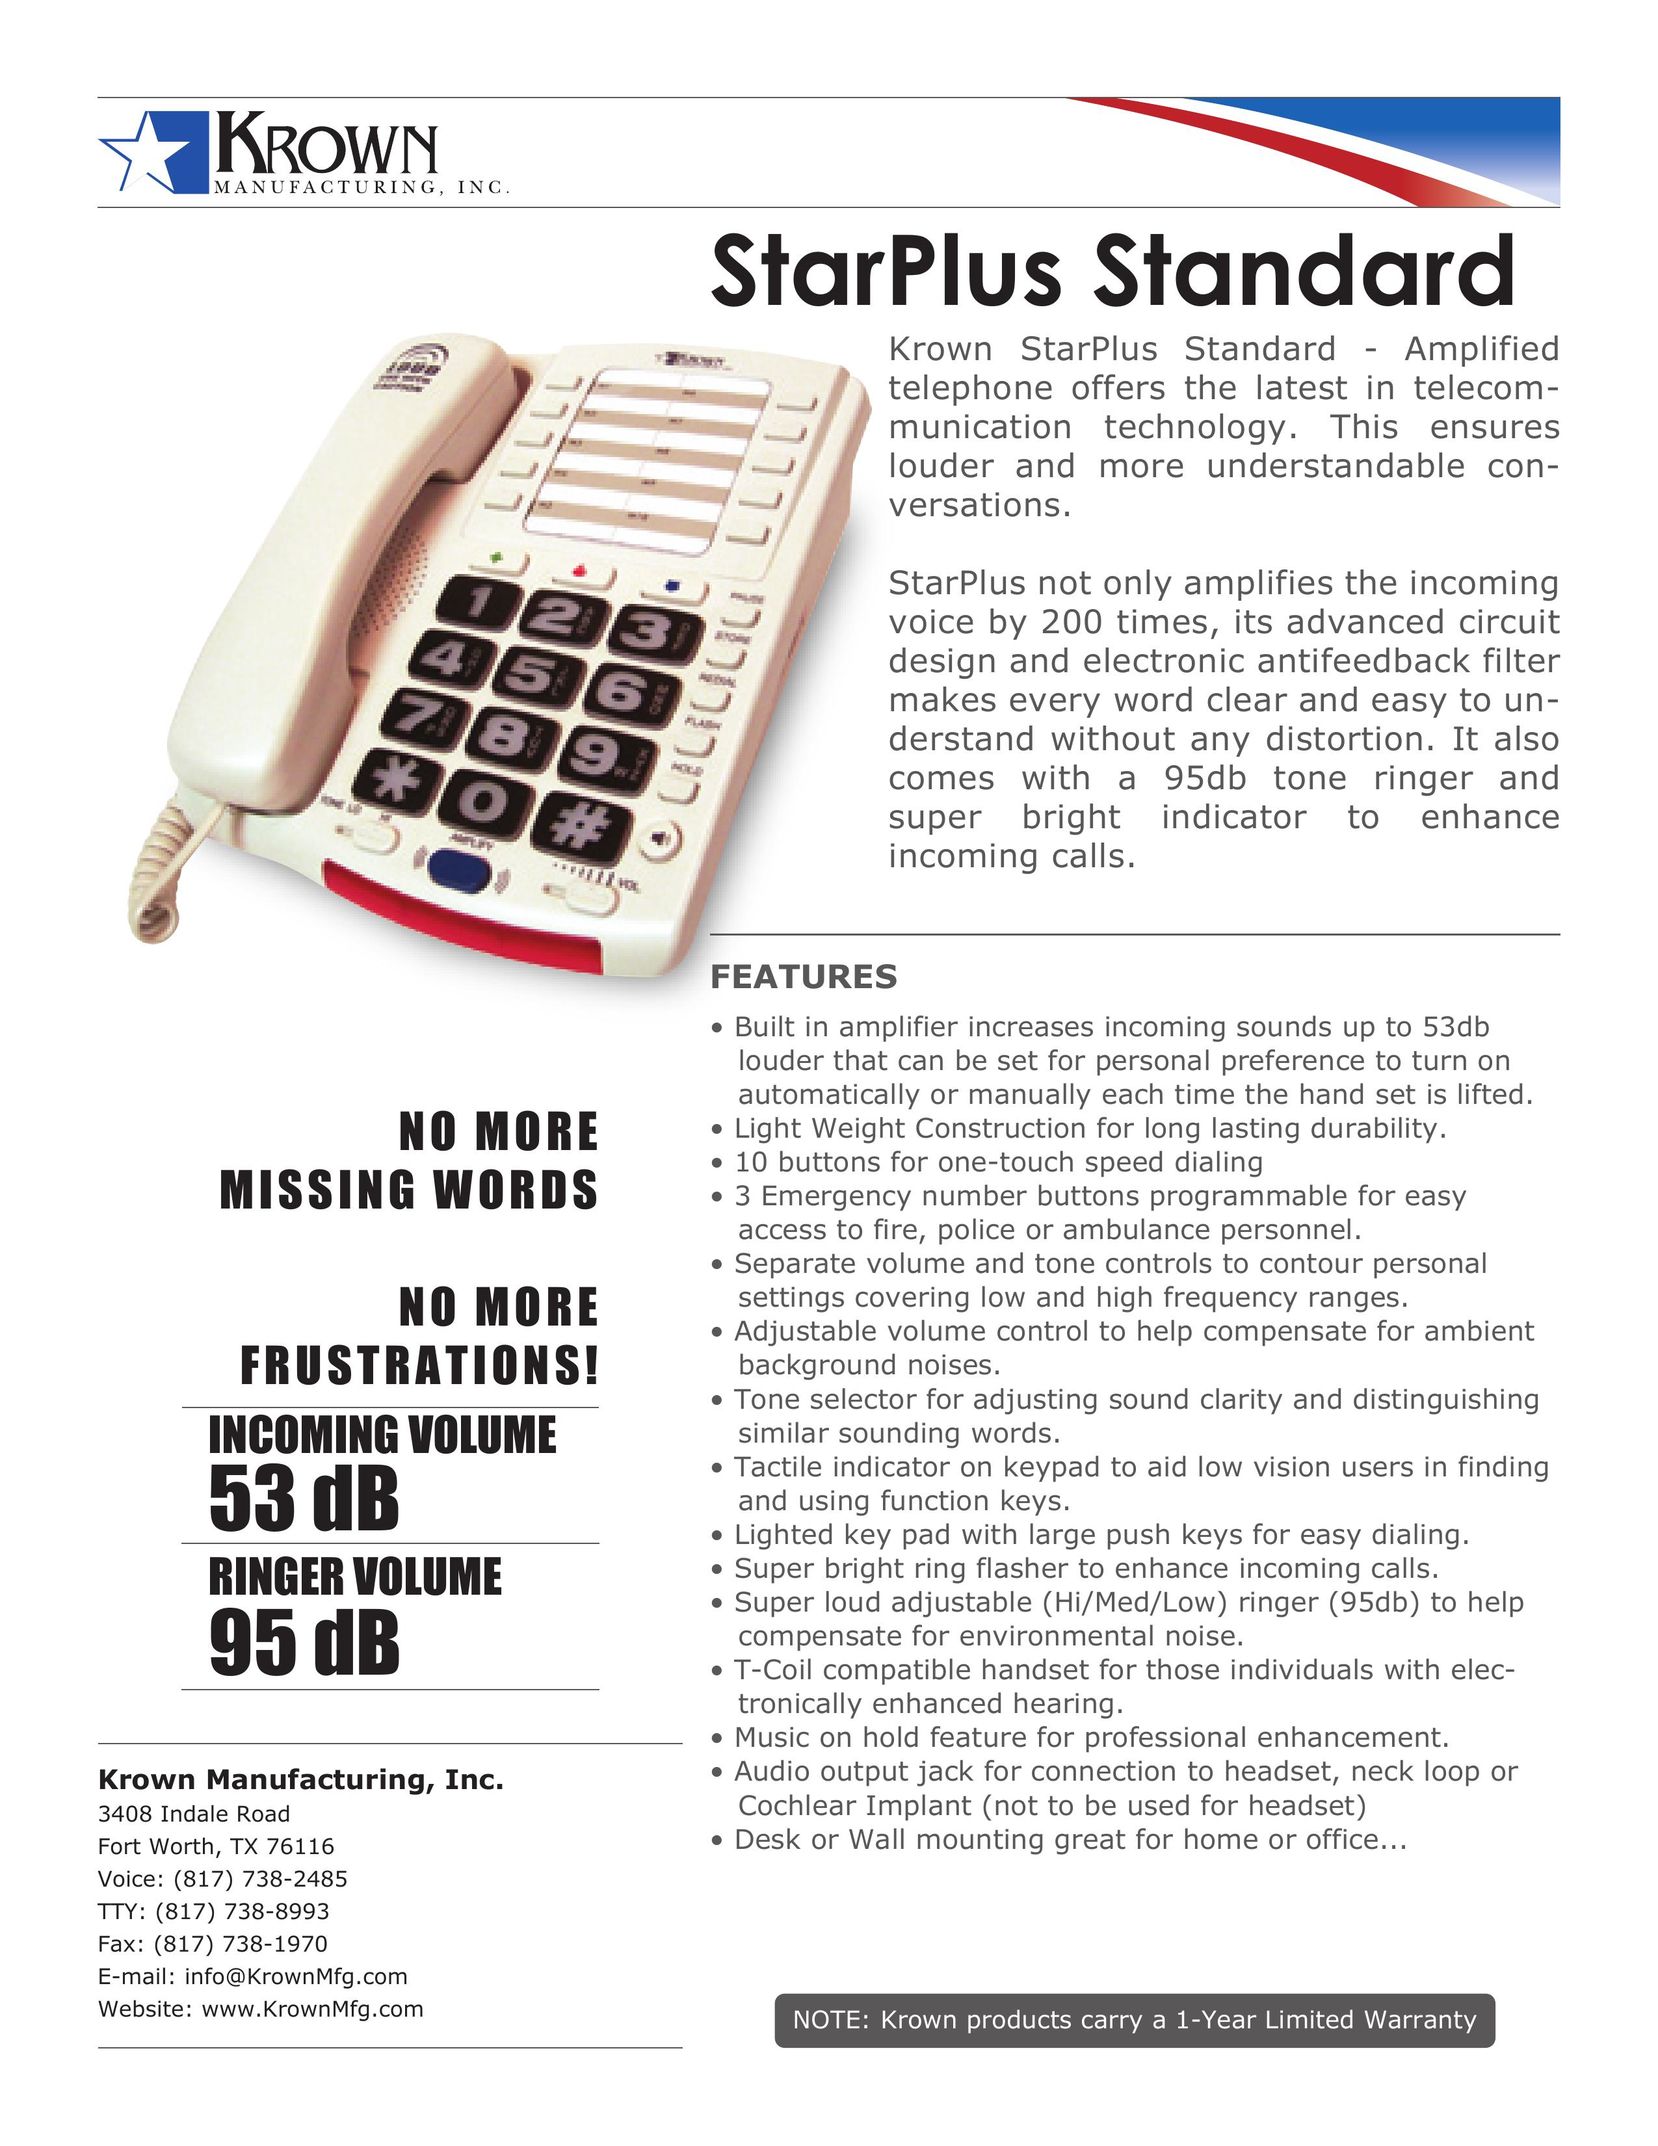 Krown Manufacturing StarPlus Standard Telephone User Manual